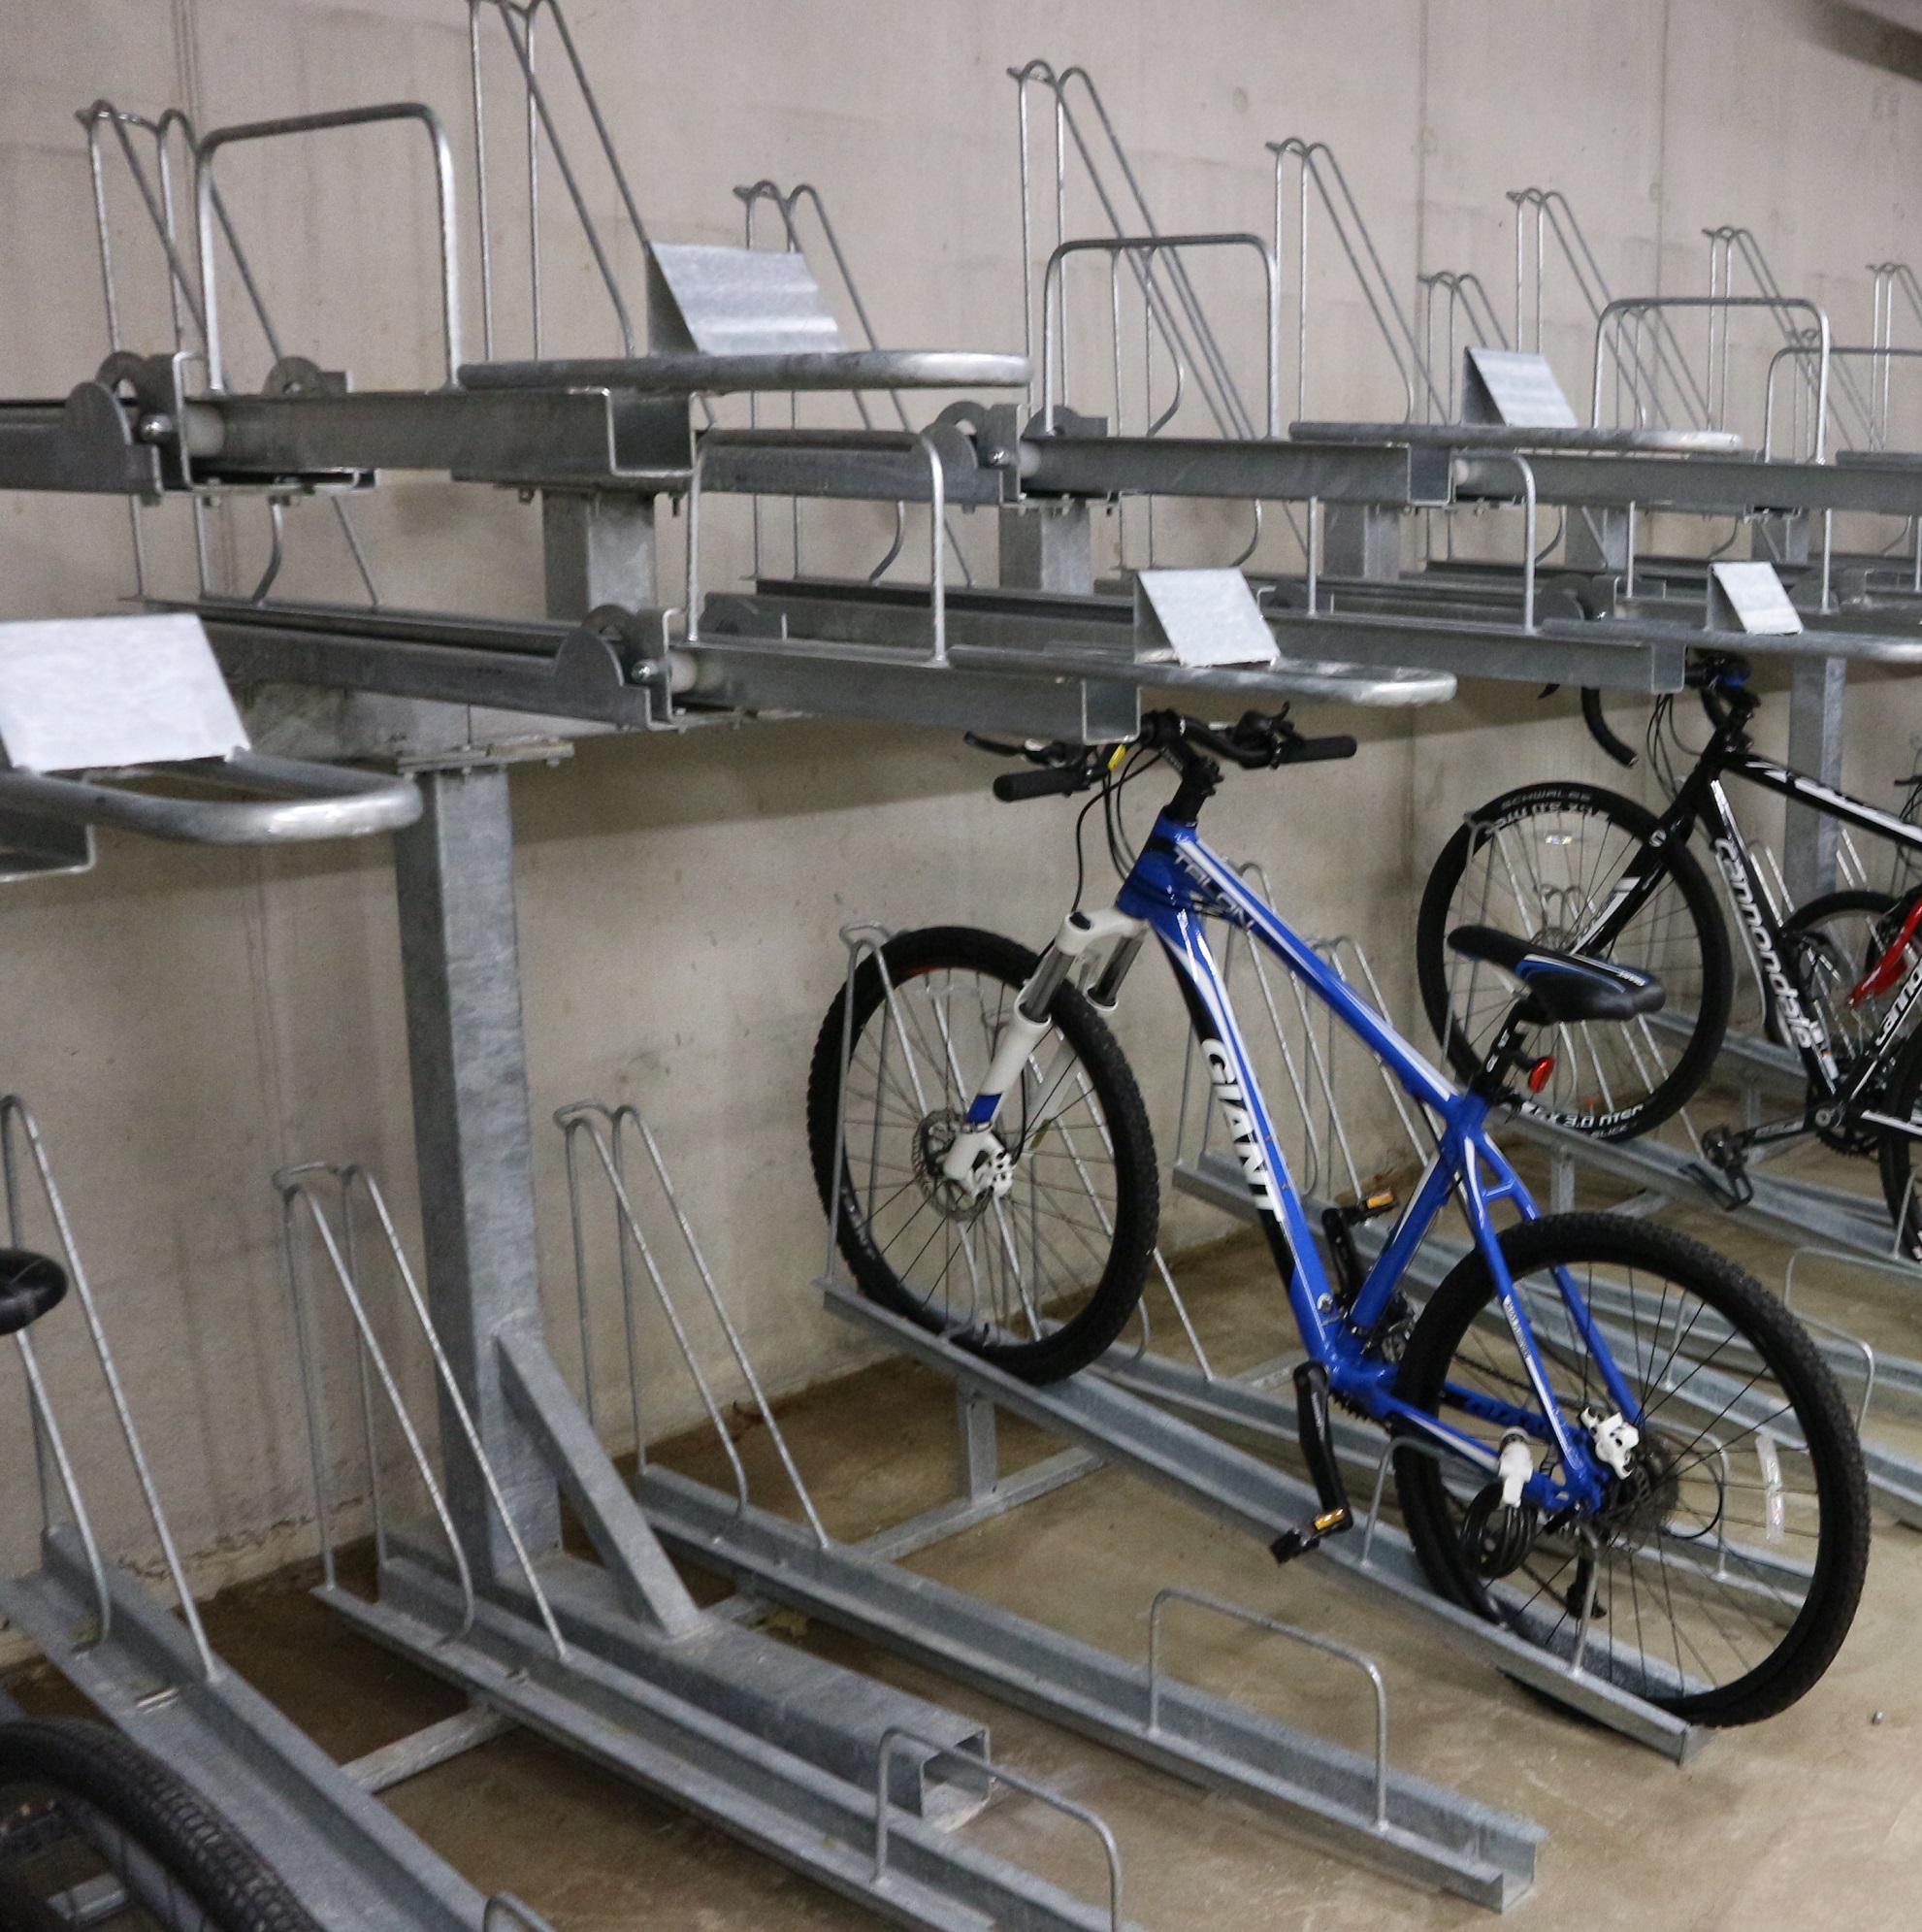 Bike Rack Systems, Double Decker Cycle Rack, Street Furniture